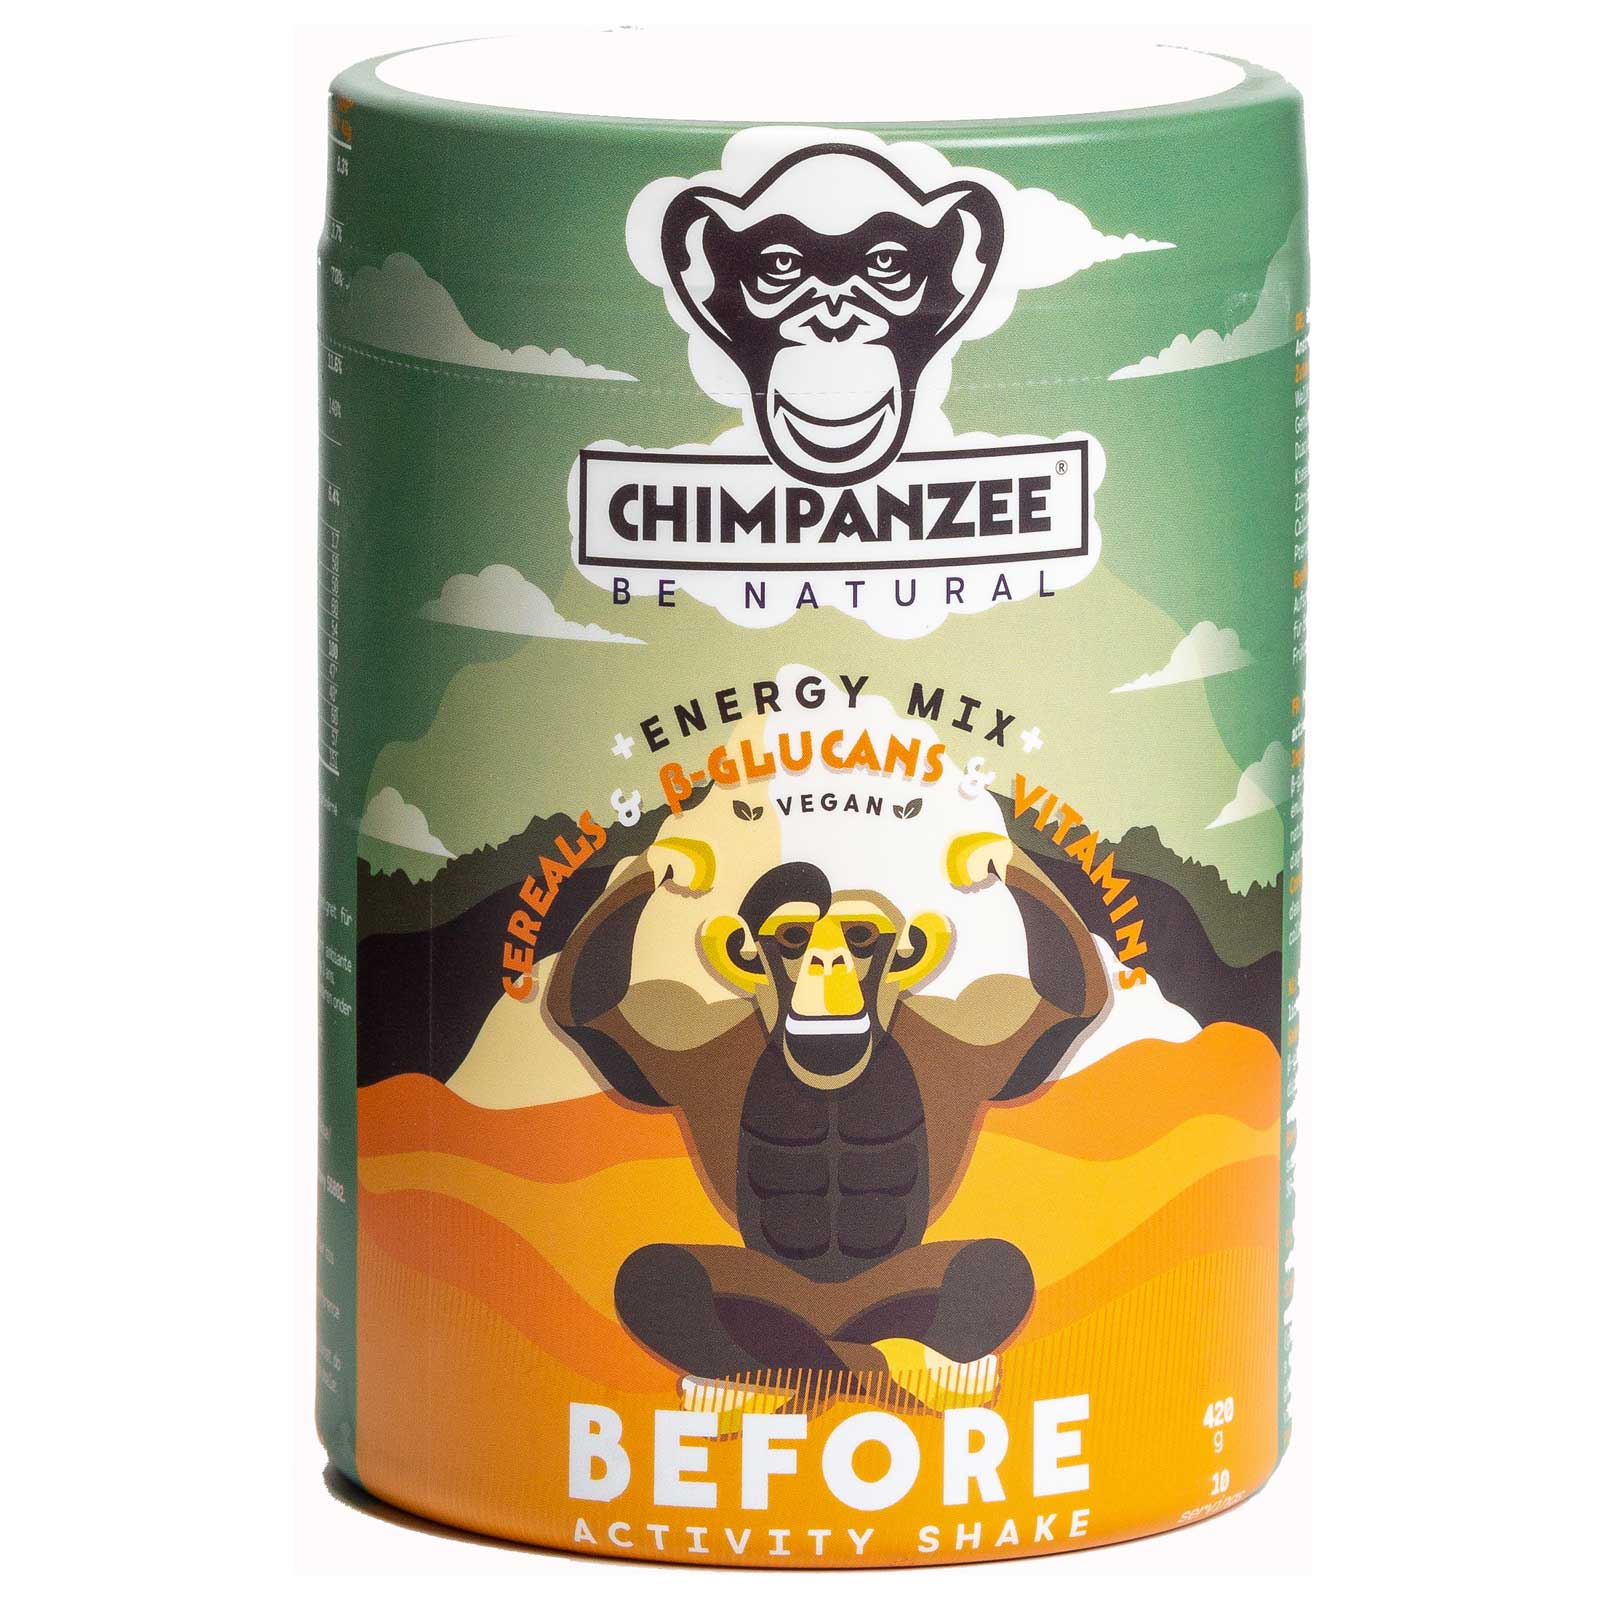 Productfoto van Chimpanzee QuickMix Energy - Before Activity Shake - 420g